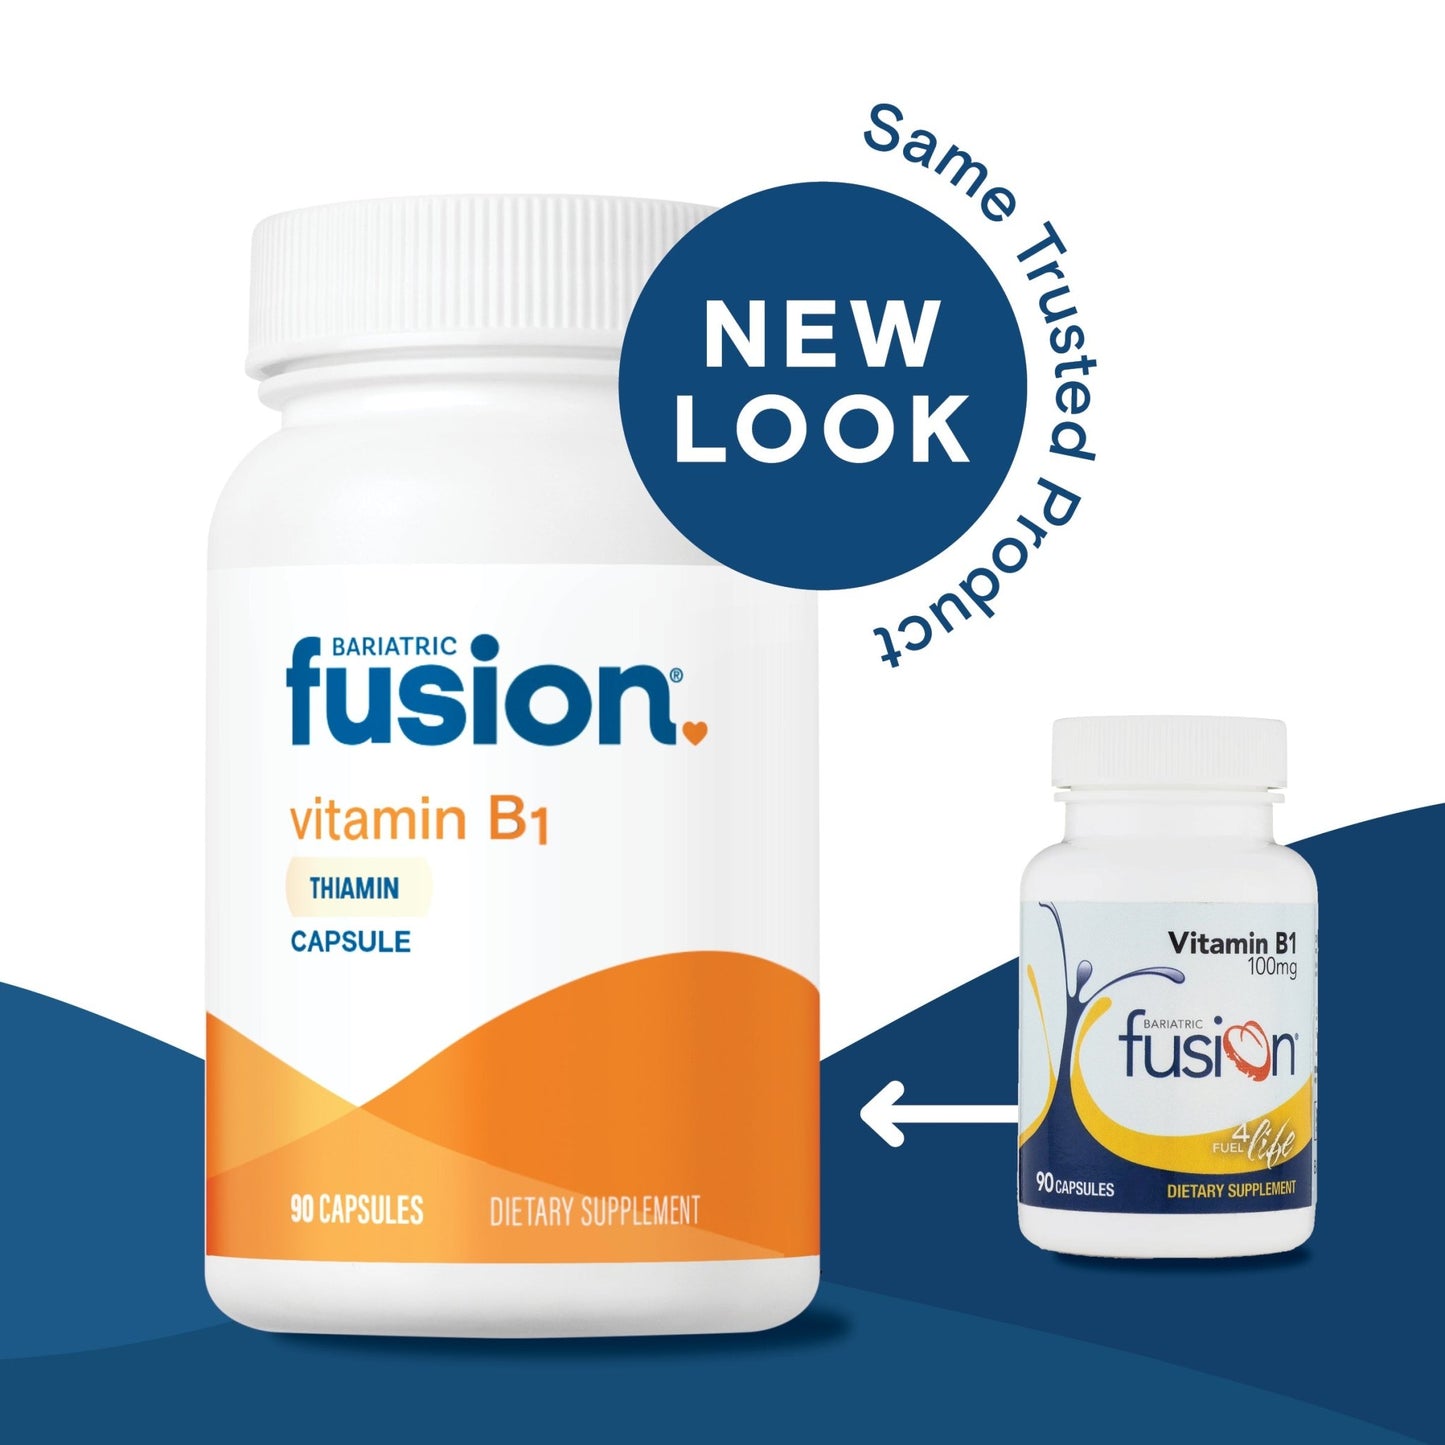 Bariatric Fusion Vitamin B1 (thiamin) new look, same trusted product.